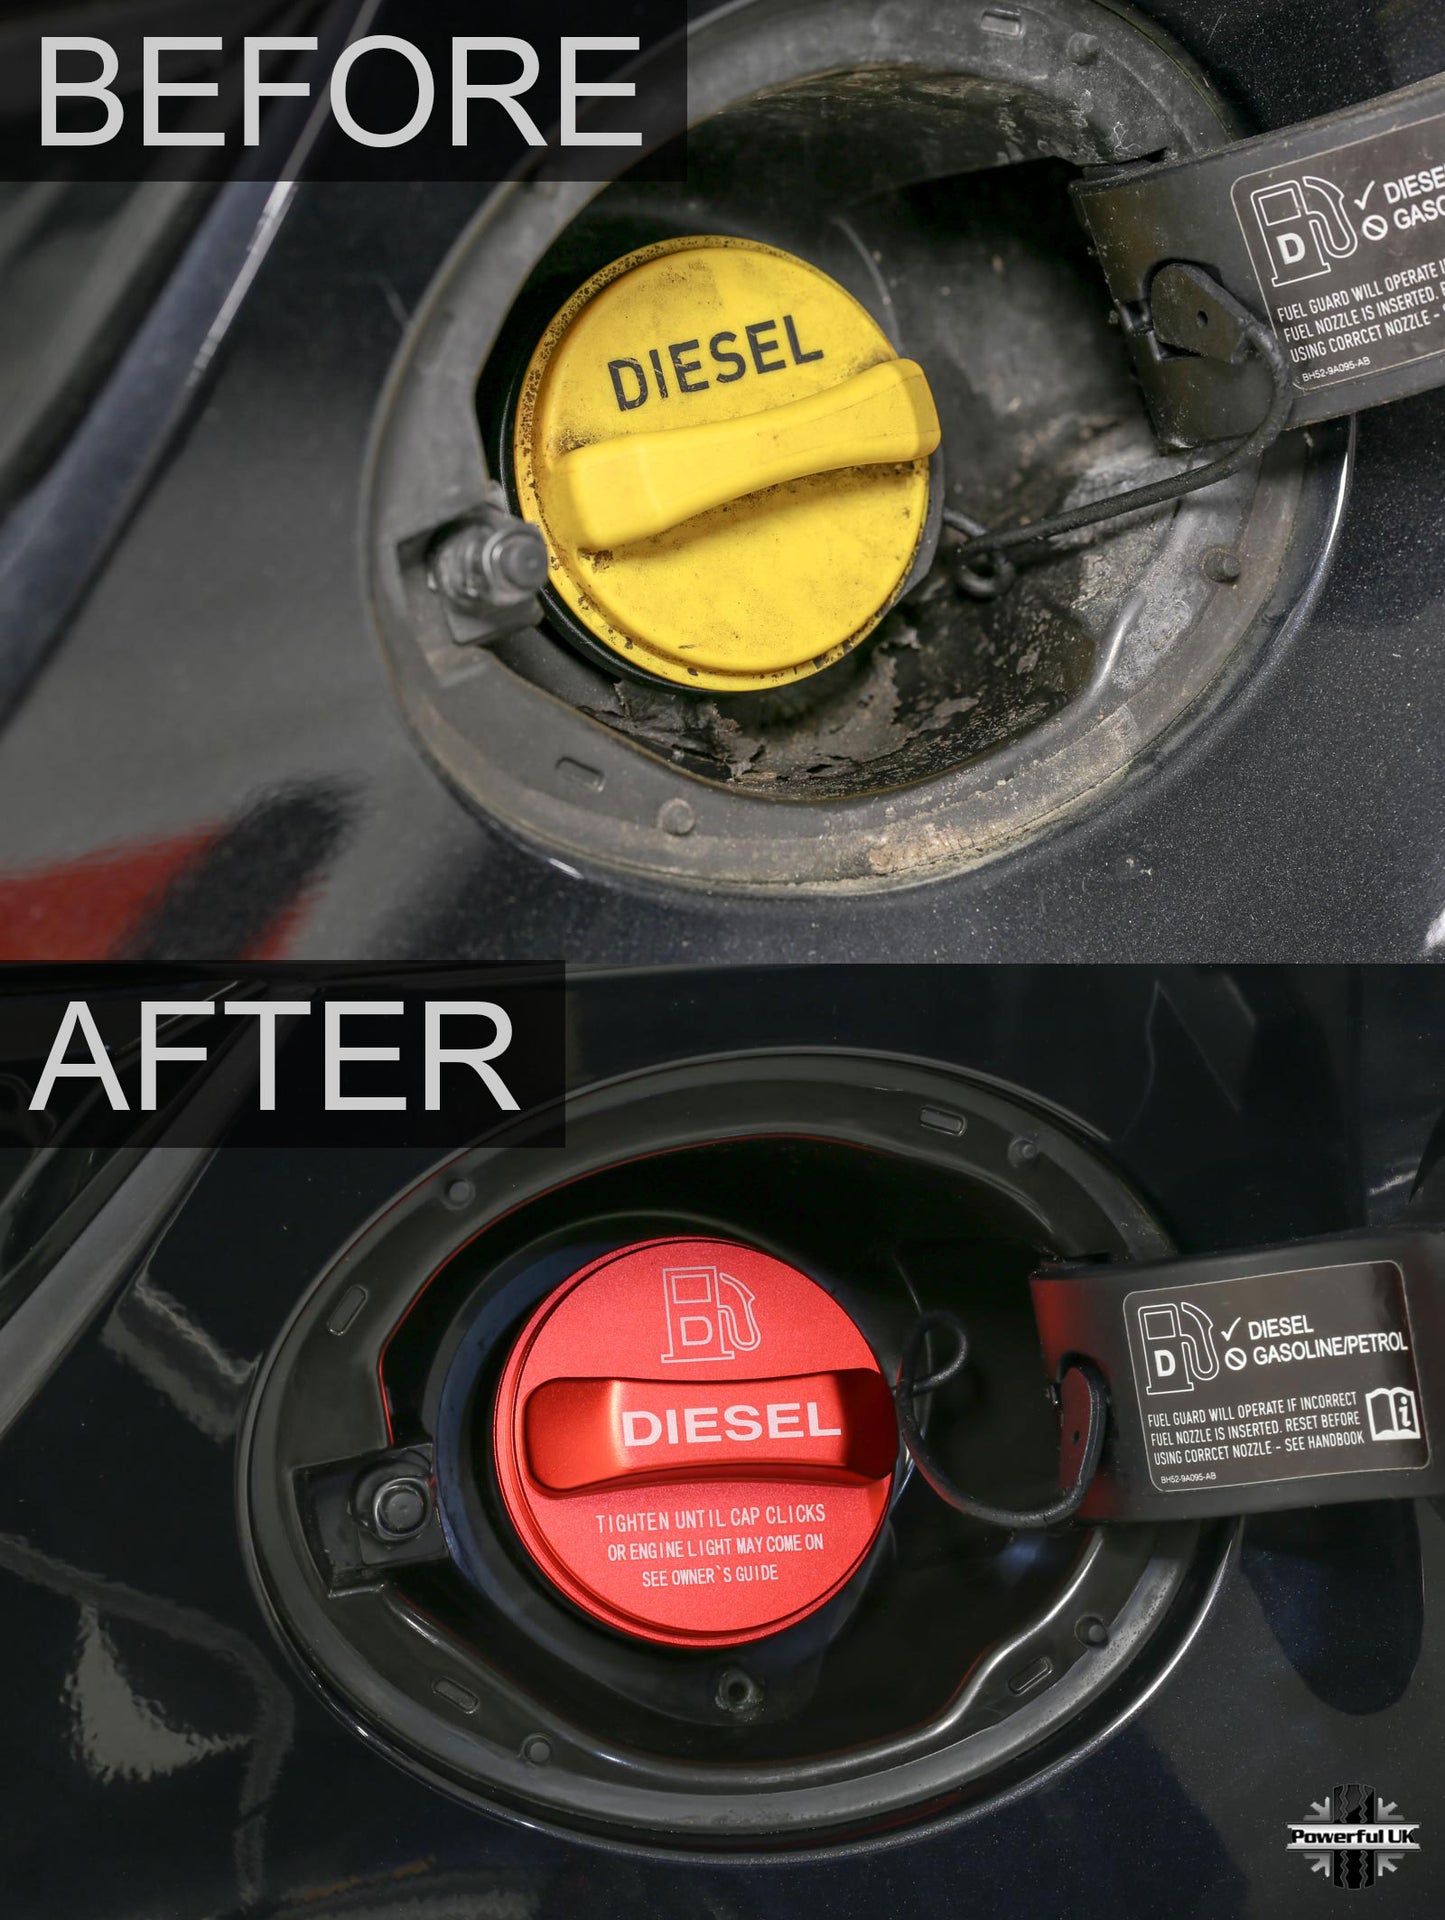 Alloy Fuel Filler Cap Cover for Range Rover Evoque - Diesel - Red